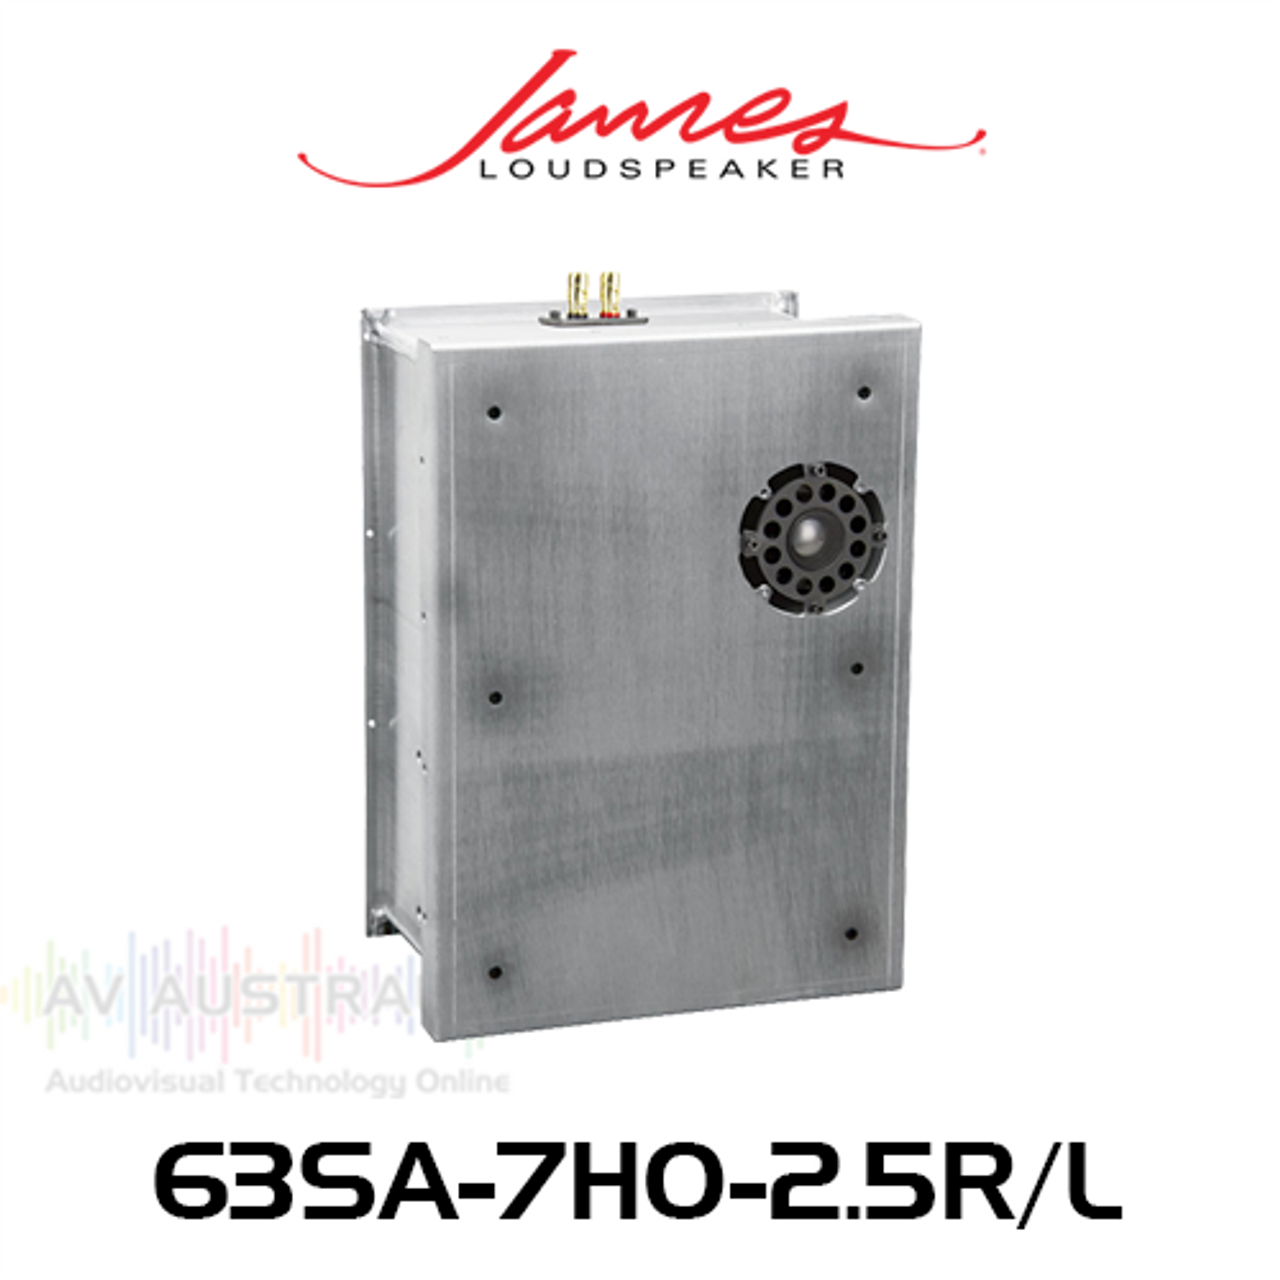 James Loudspeaker 63SA-7HO-2.5R/L 6.5" 3-Way Full Range Small Aperture In-Wall/Ceiling Speaker with Offset (Each)